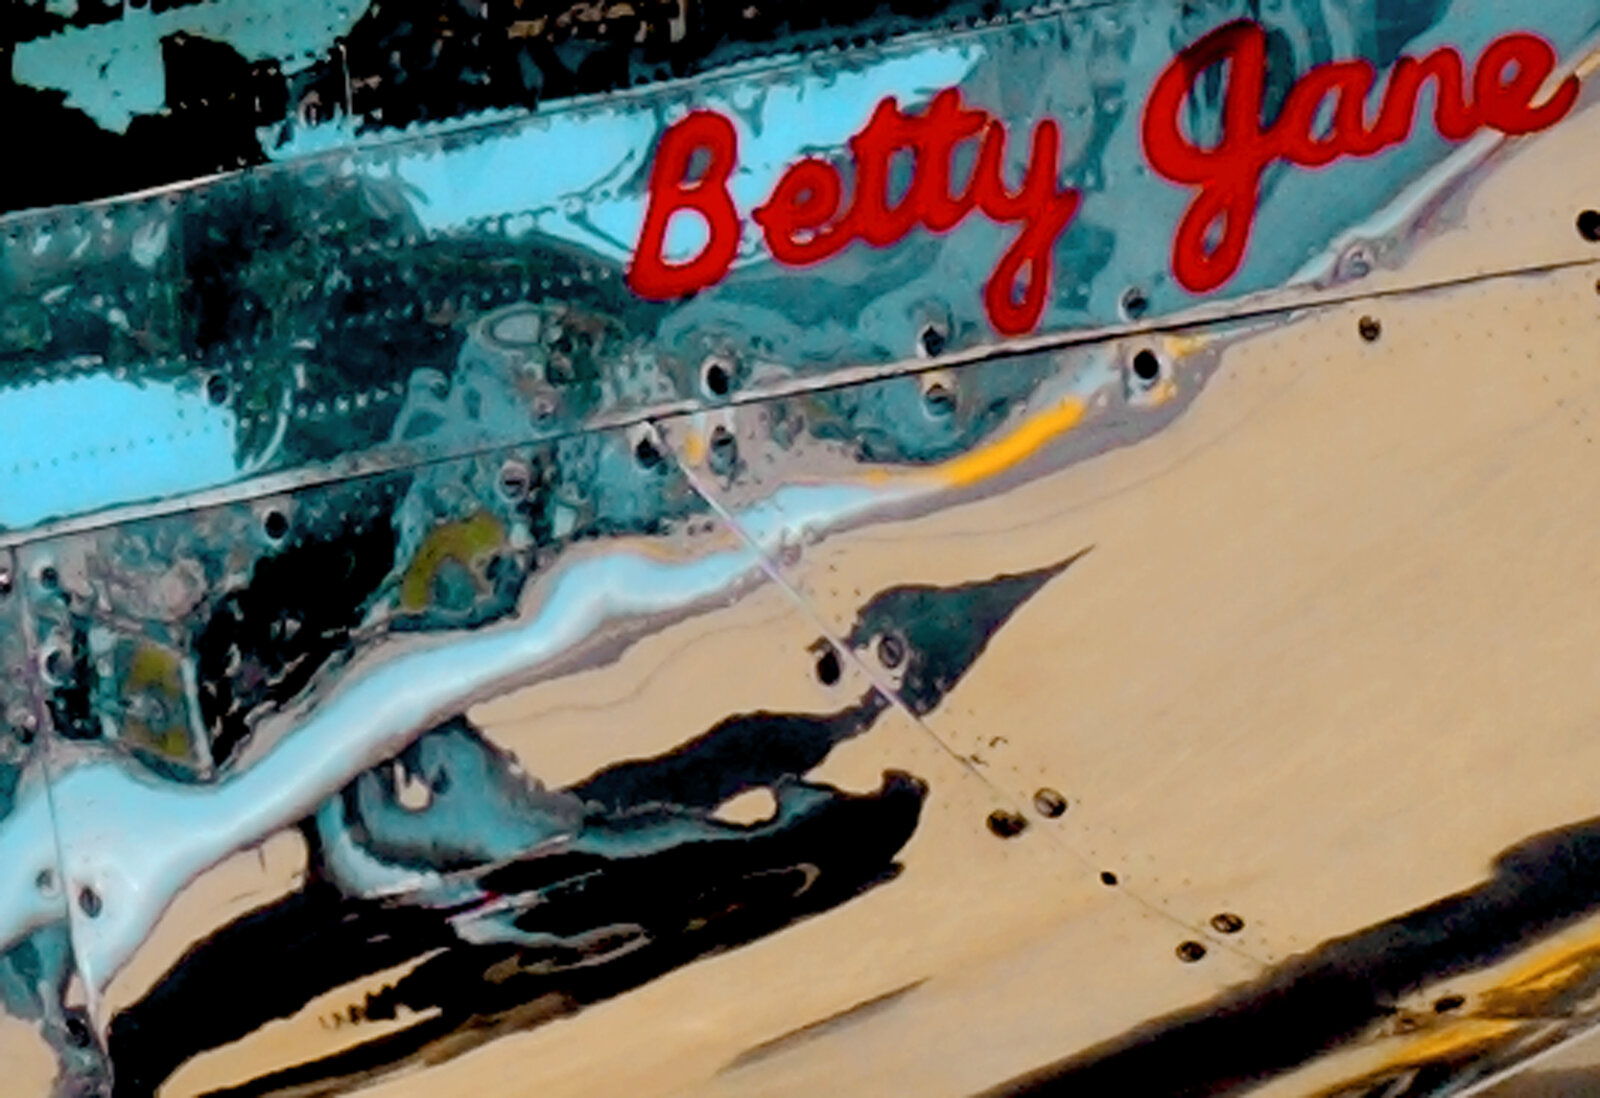 Aircraft Nose Art - "Betty Jane" P-51 Mustang